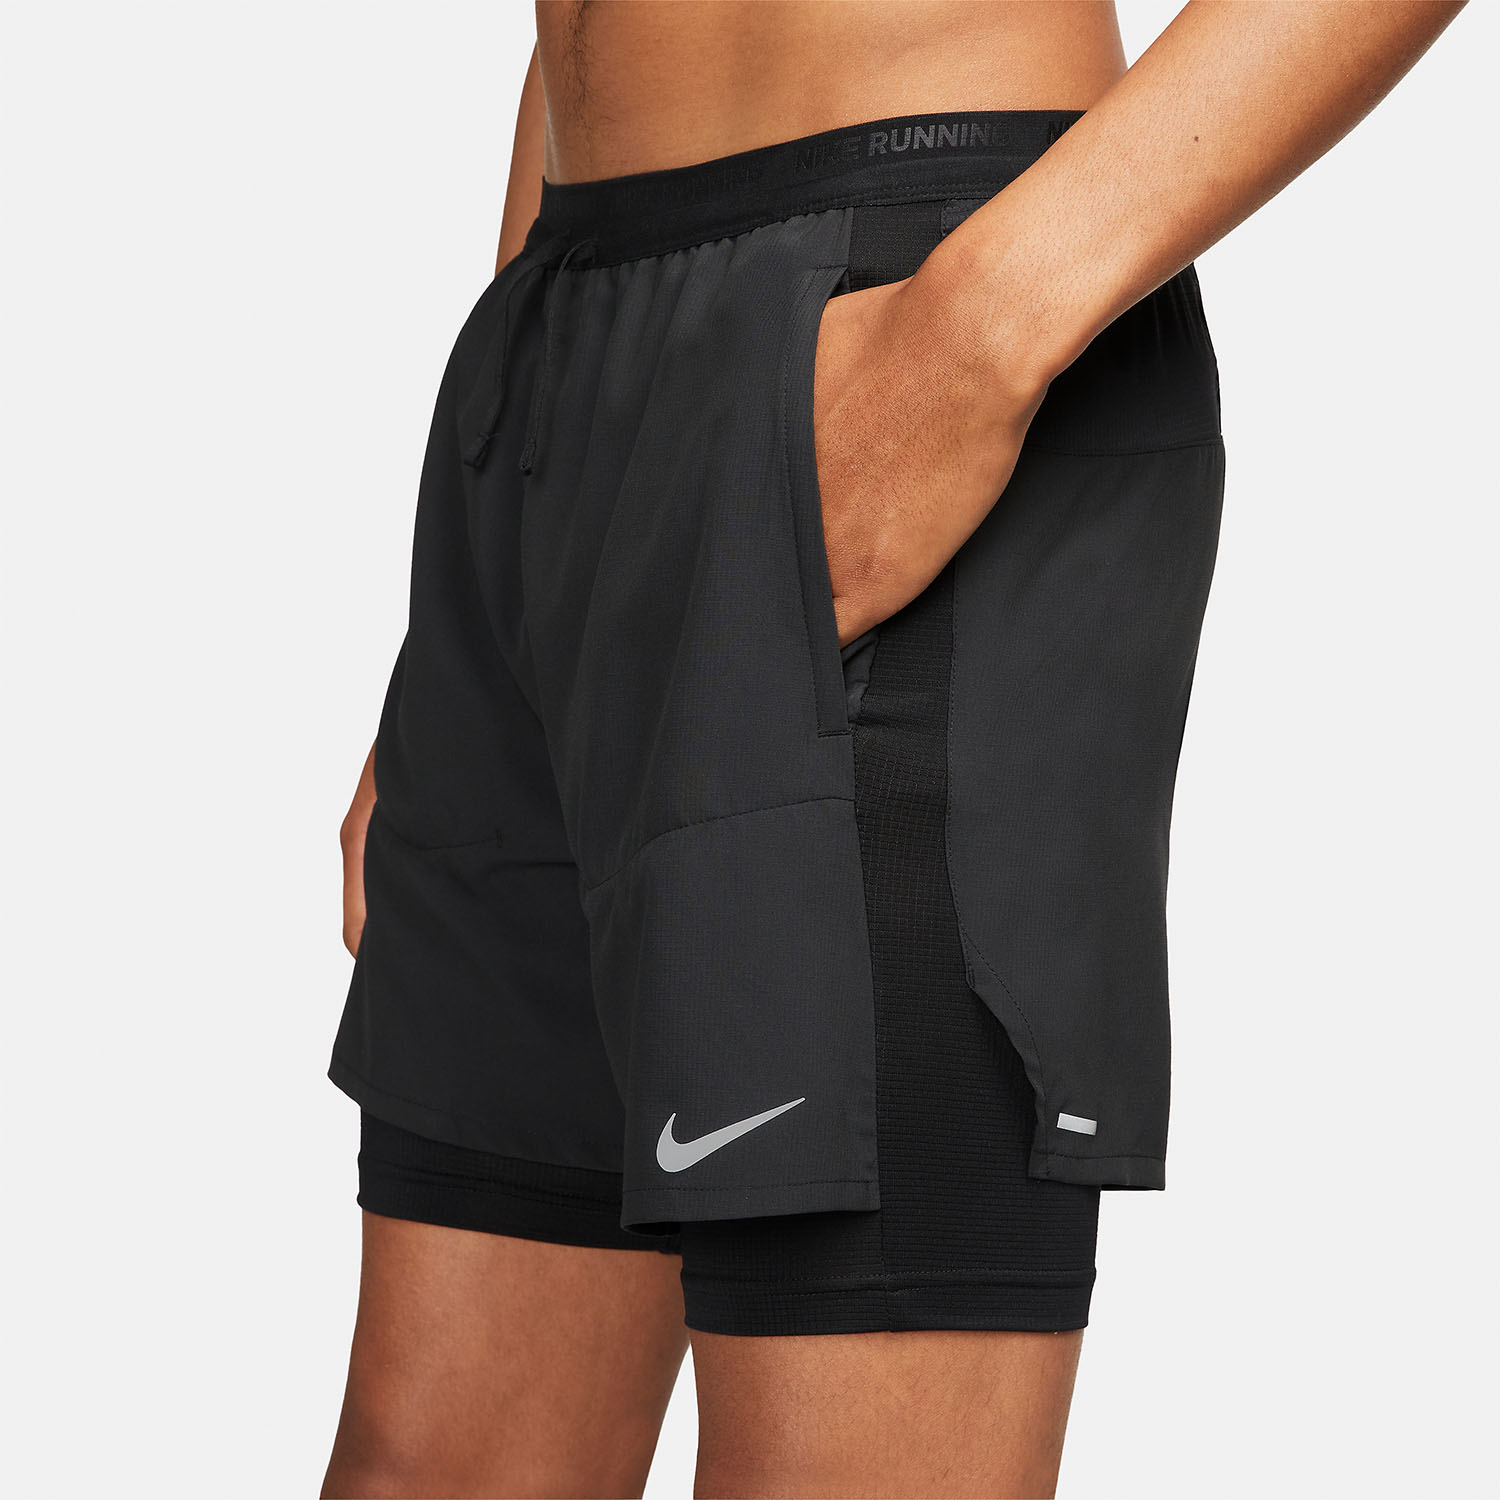 Nike Dri-FIT Stride Hybrid 2 in 1 5in Shorts - Black/Reflective Silver